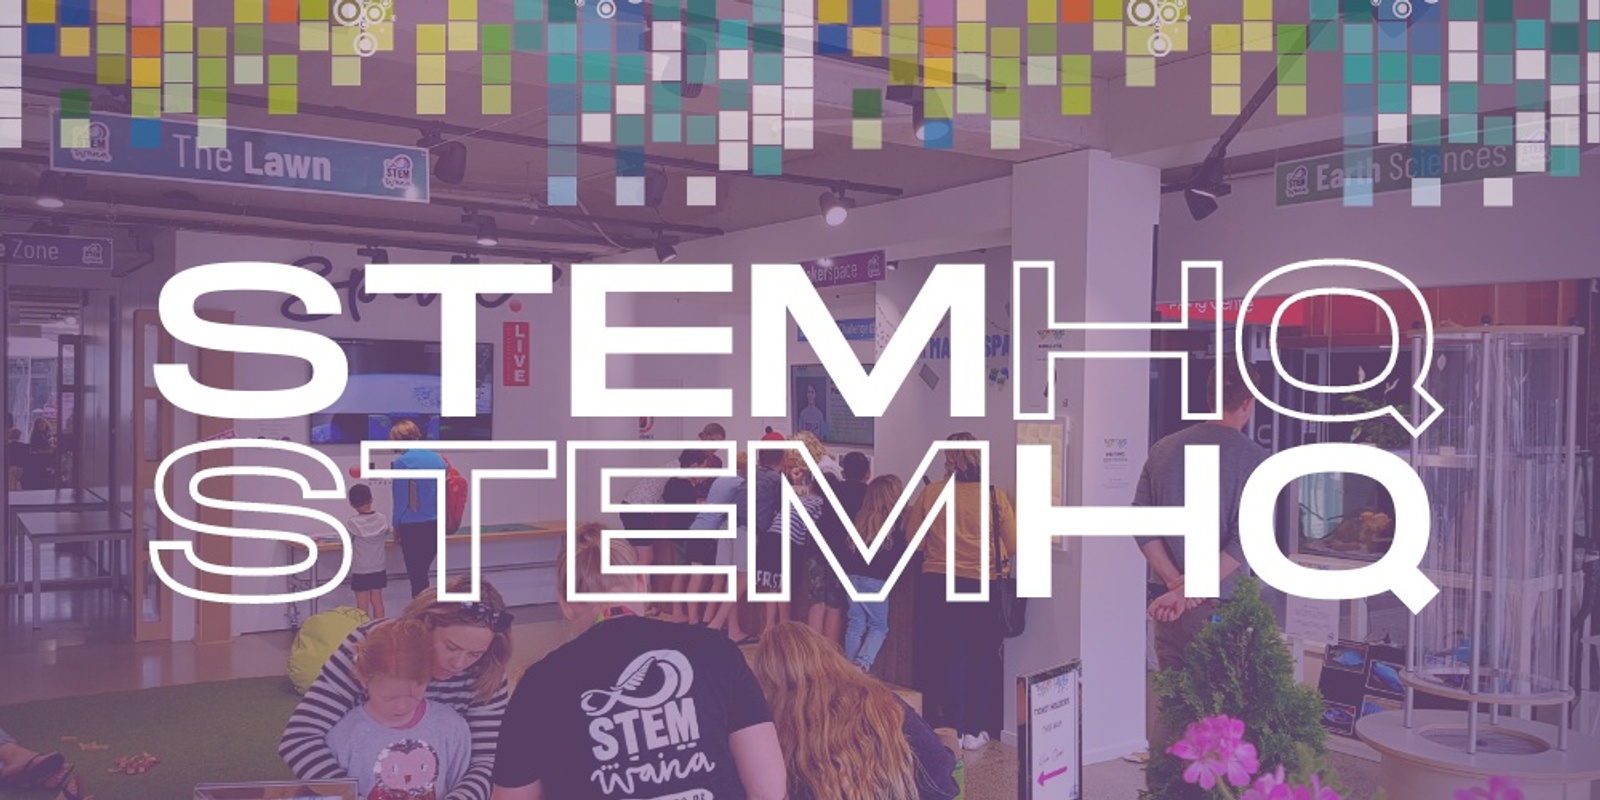 Banner image for STEM HQ